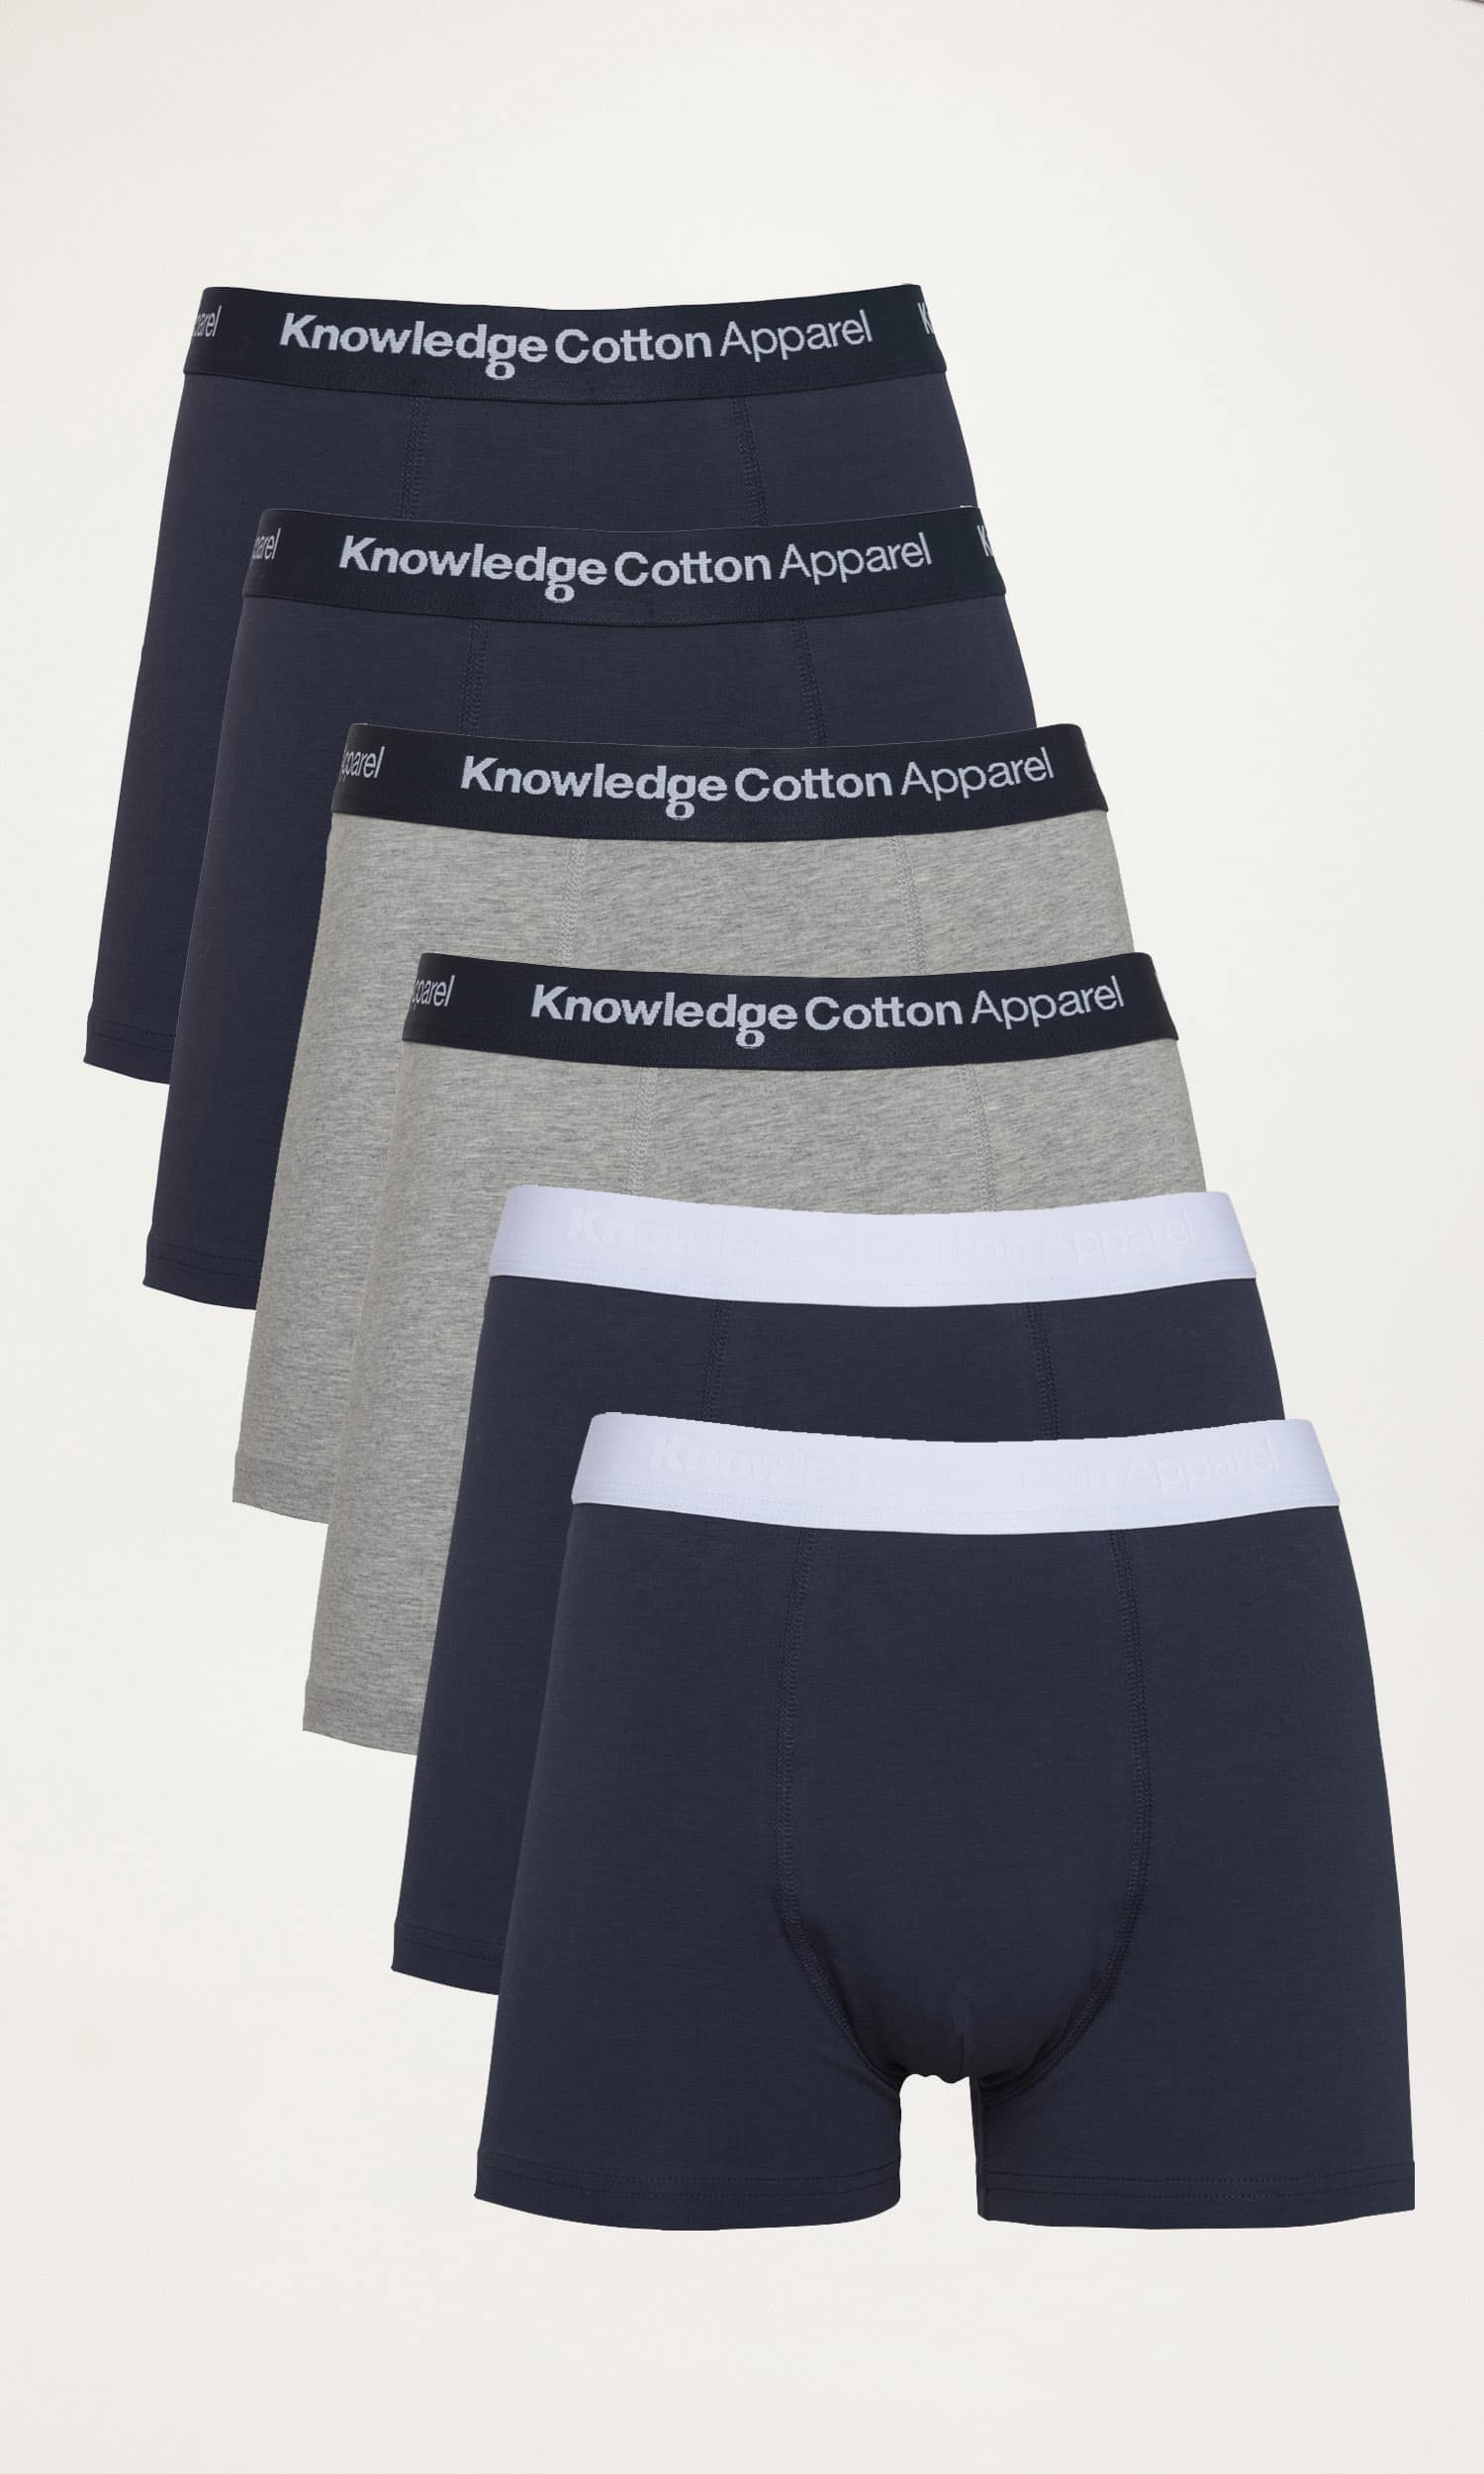 Basics Underwear for Men - KnowledgeCotton Apparel®